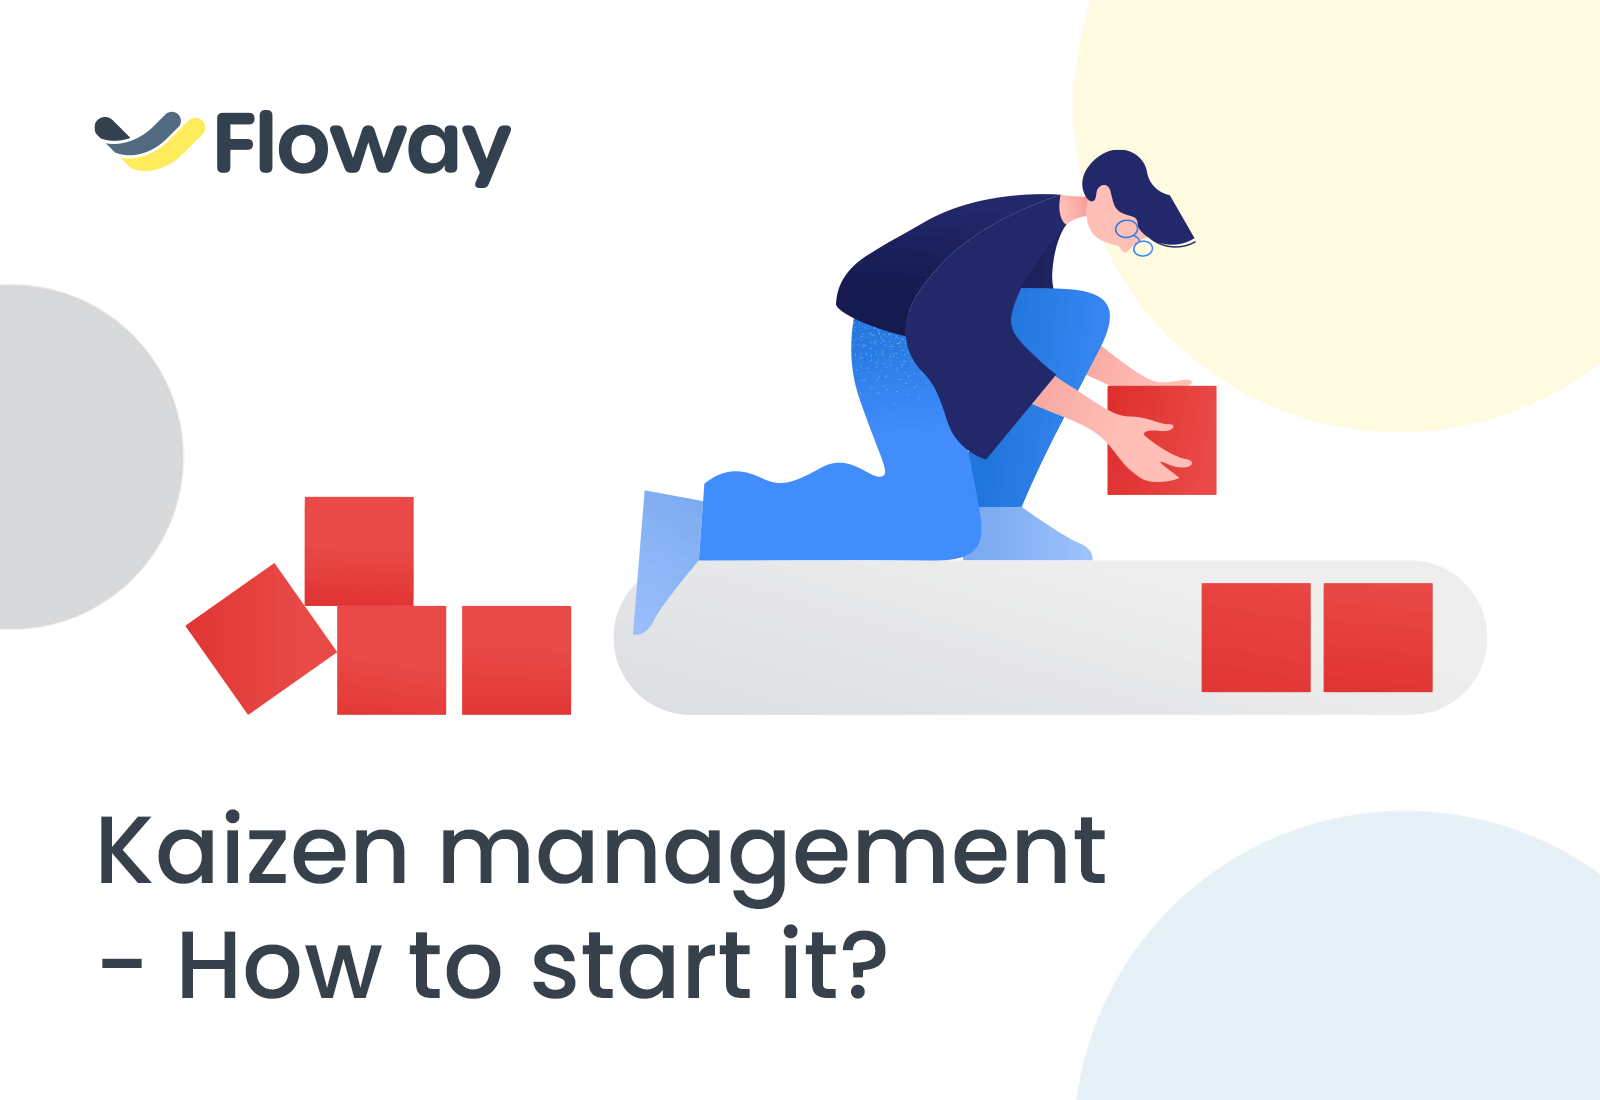 Blog floway - Kaizen management - How to start it